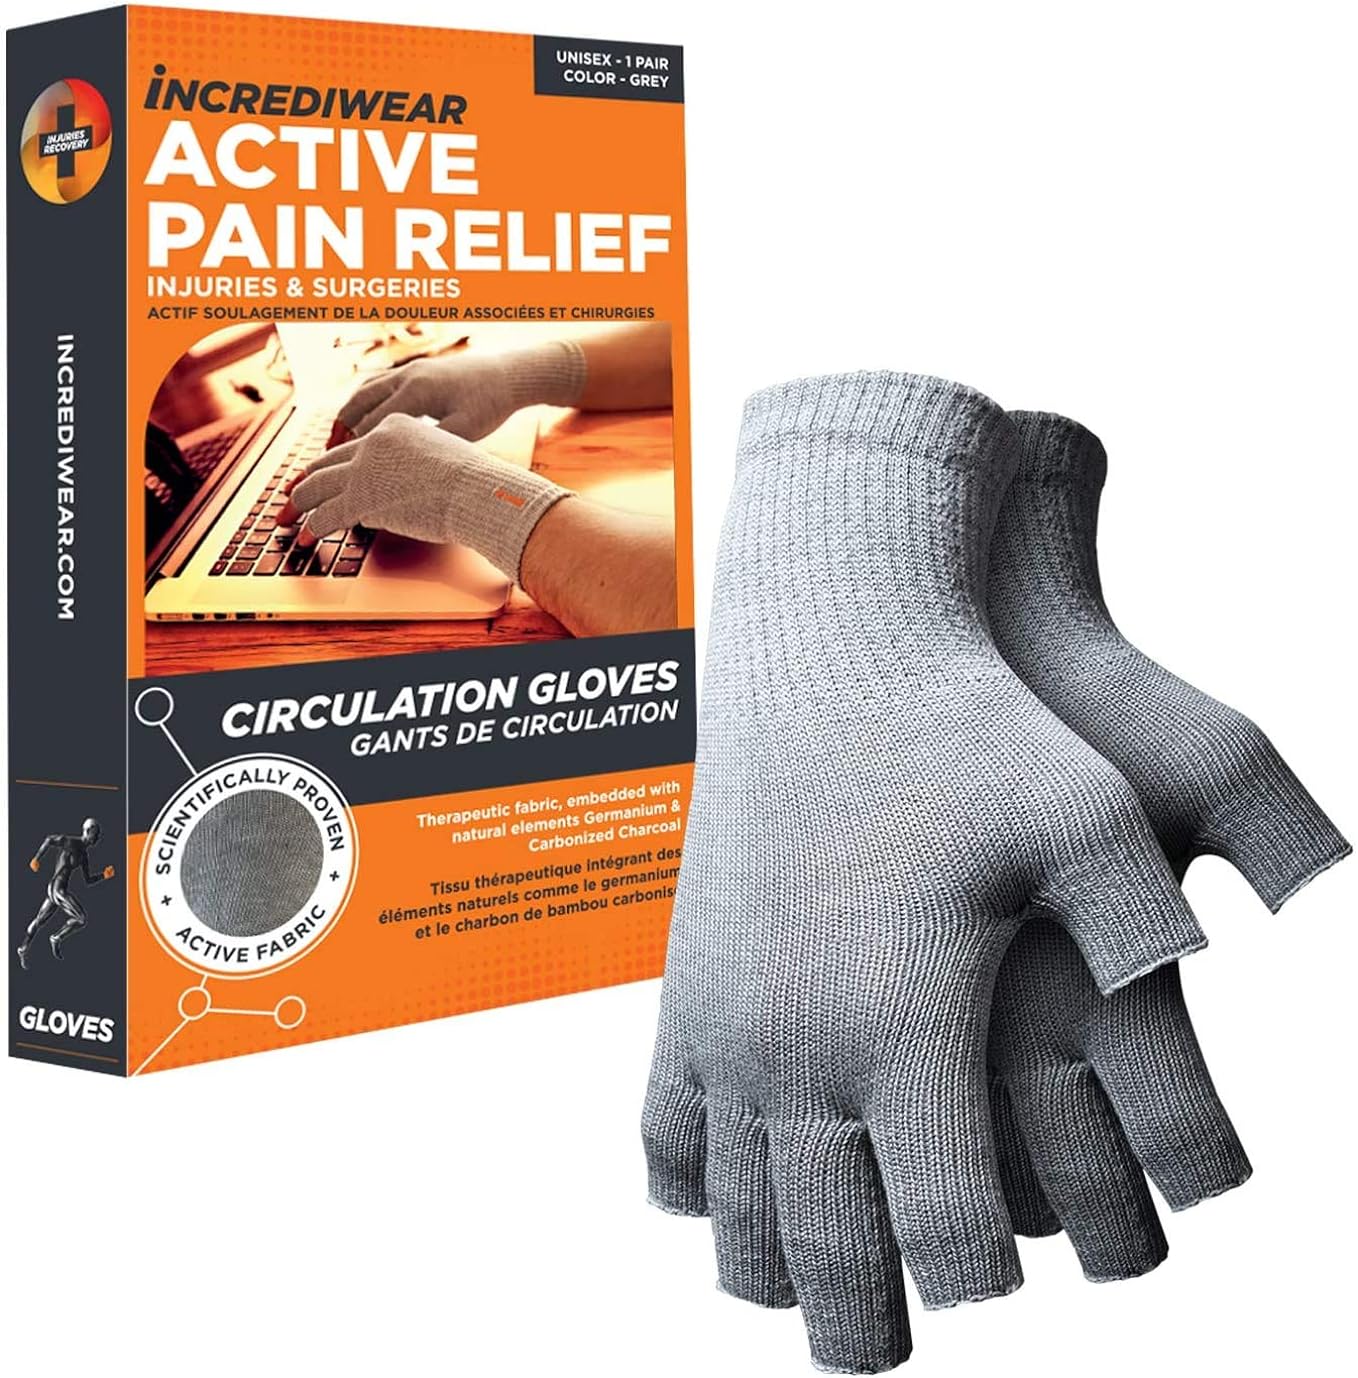 Incrediwear Fingerless Circulation Gloves Arthritis Gloves, Grey